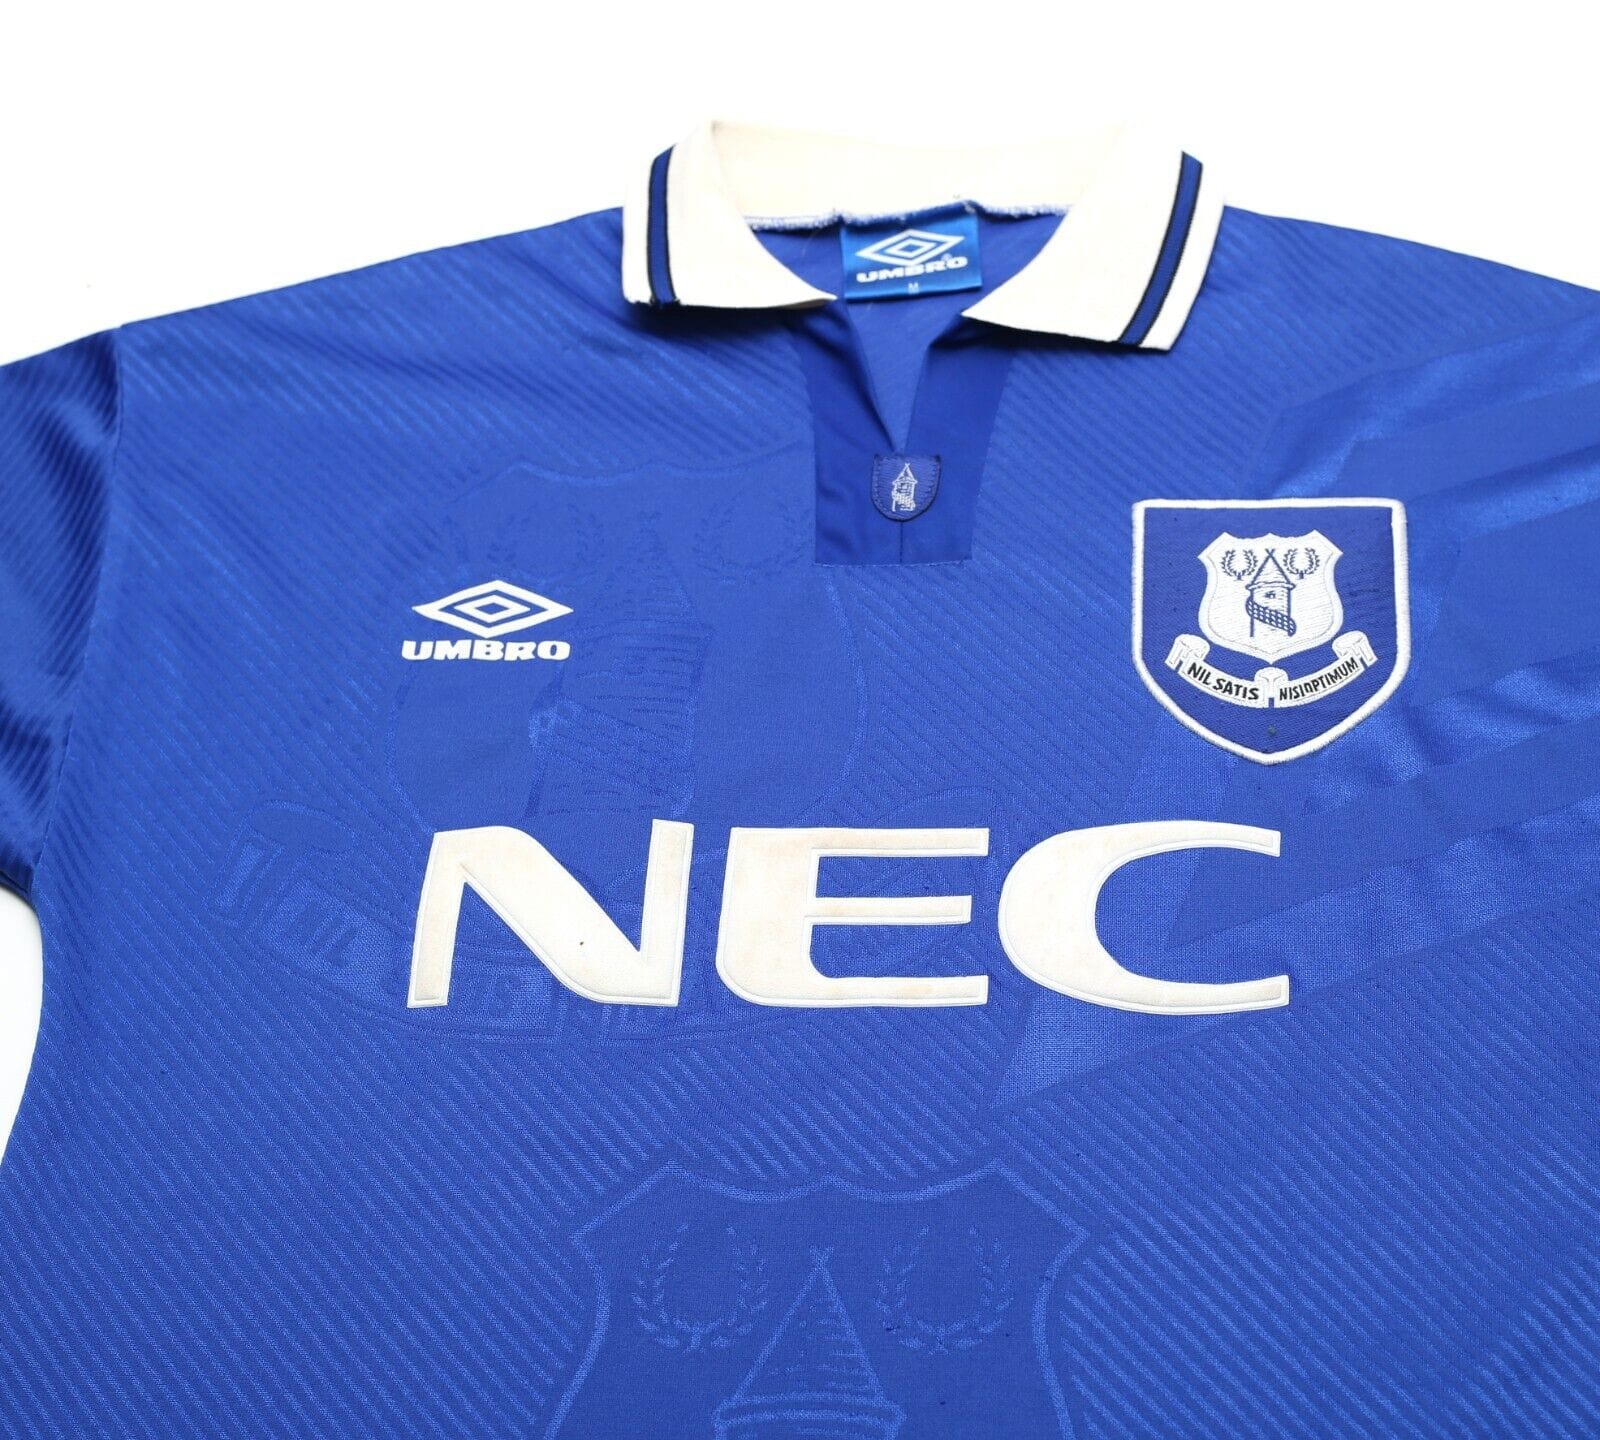 1993/95 AMOKACHI #11 Everton Vintage Umbro HOME Football Shirt (M)